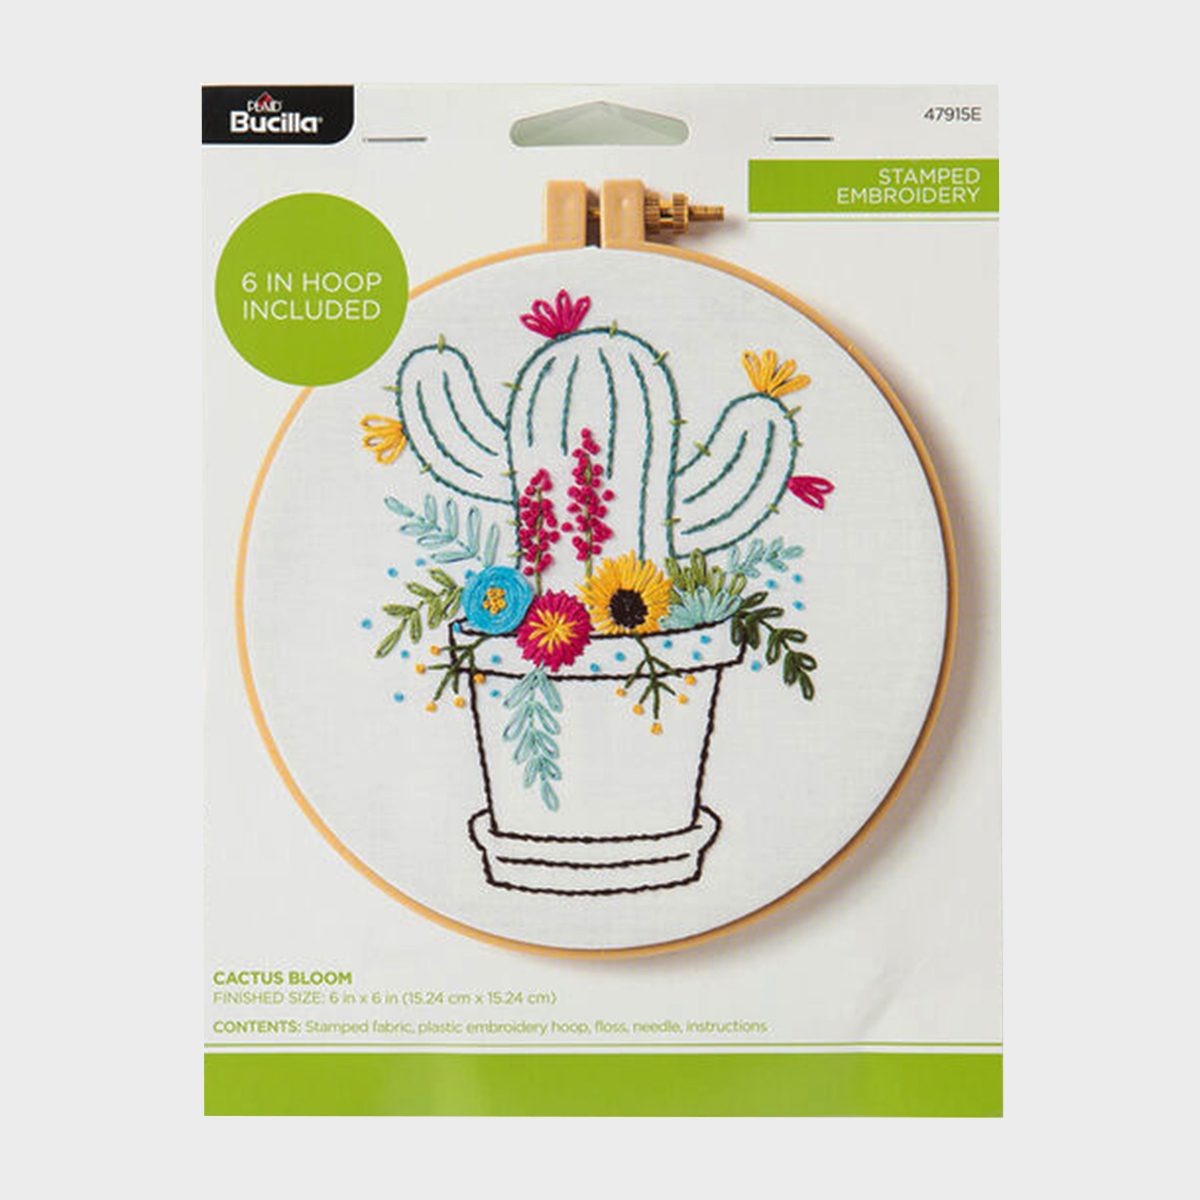 https://www.rd.com/wp-content/uploads/2021/12/Bucilla-Stamped-Embroidery-Kit-Cactus-Bloom-via-joann.com-ecomm.jpg?fit=700%2C700